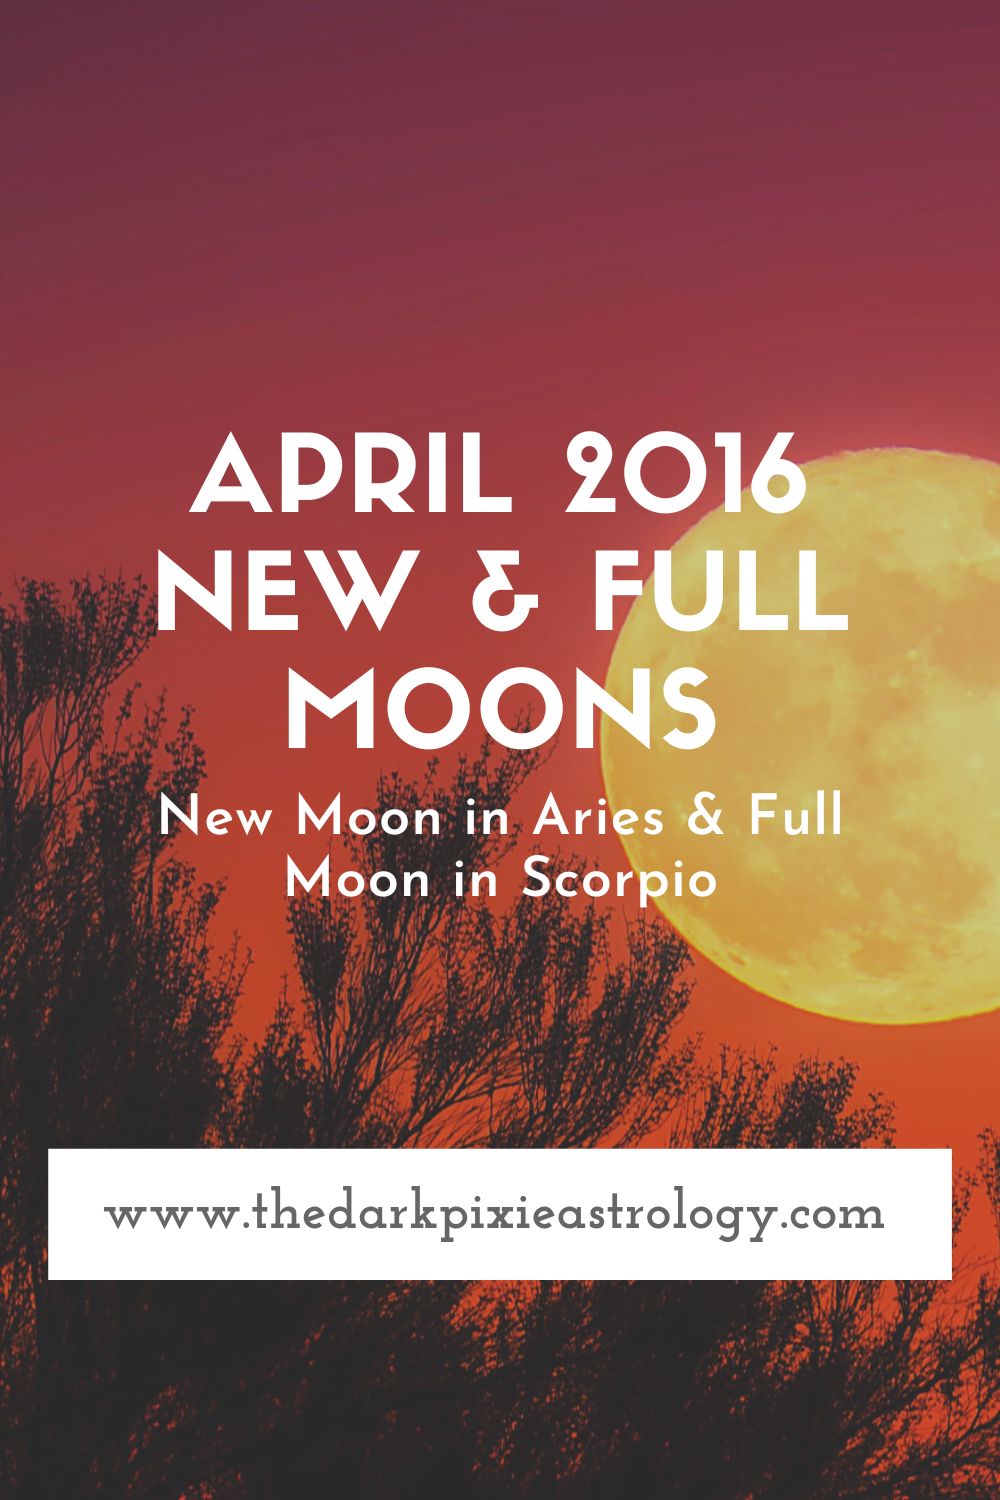 April 2016 New & Full Moons - The Dark Pixie Astrology